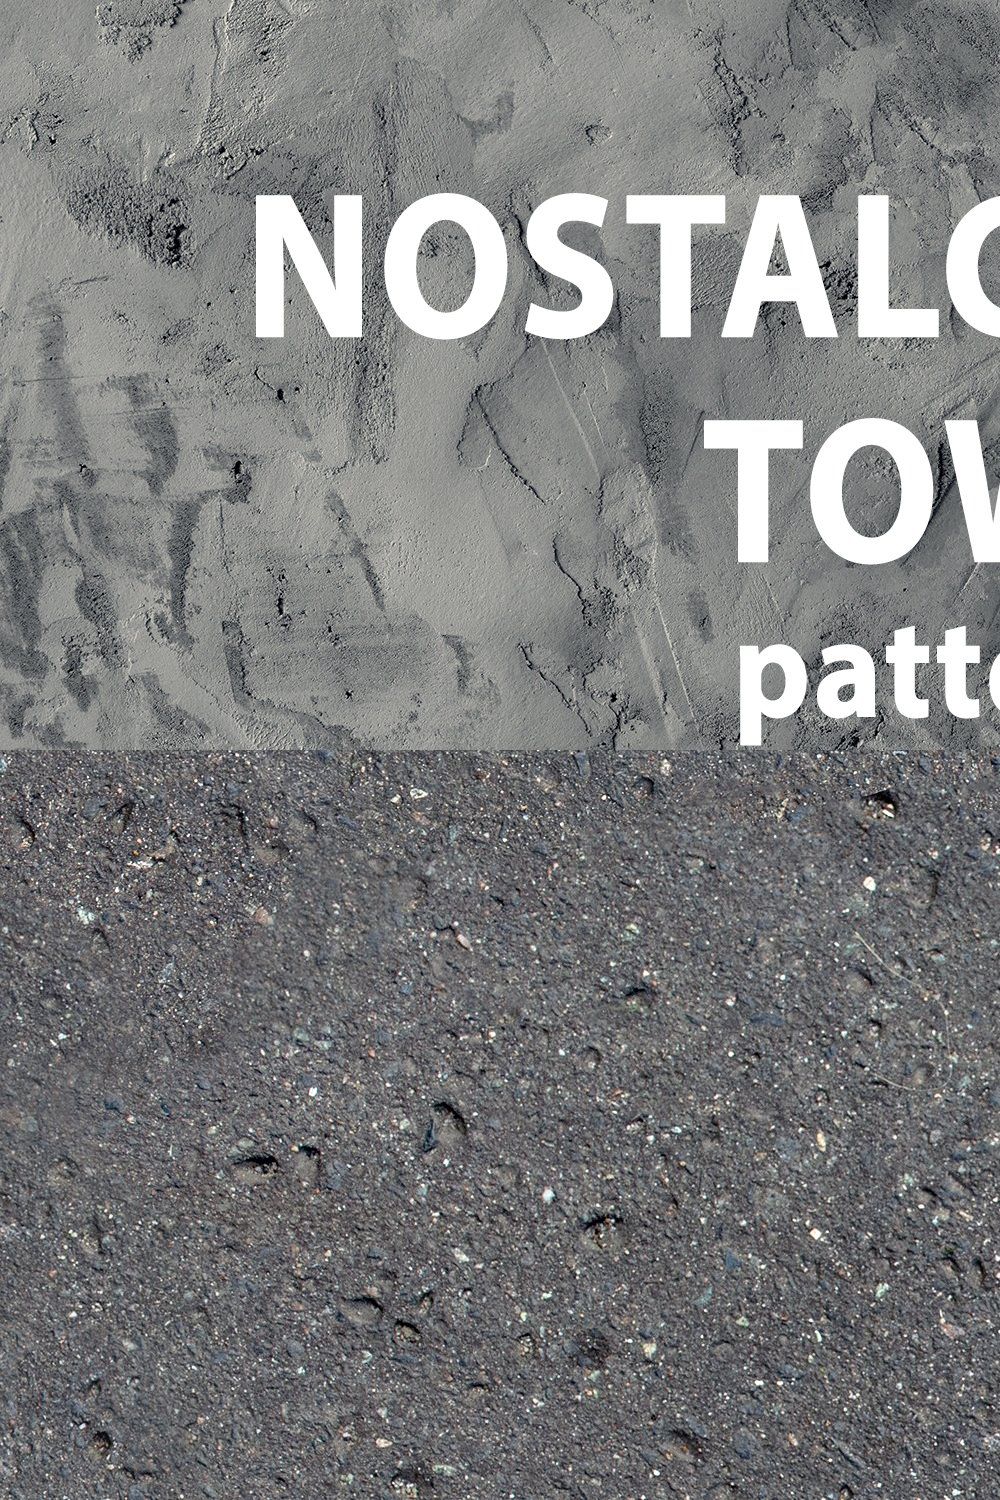 Nostalgic Town: Patterns pinterest preview image.